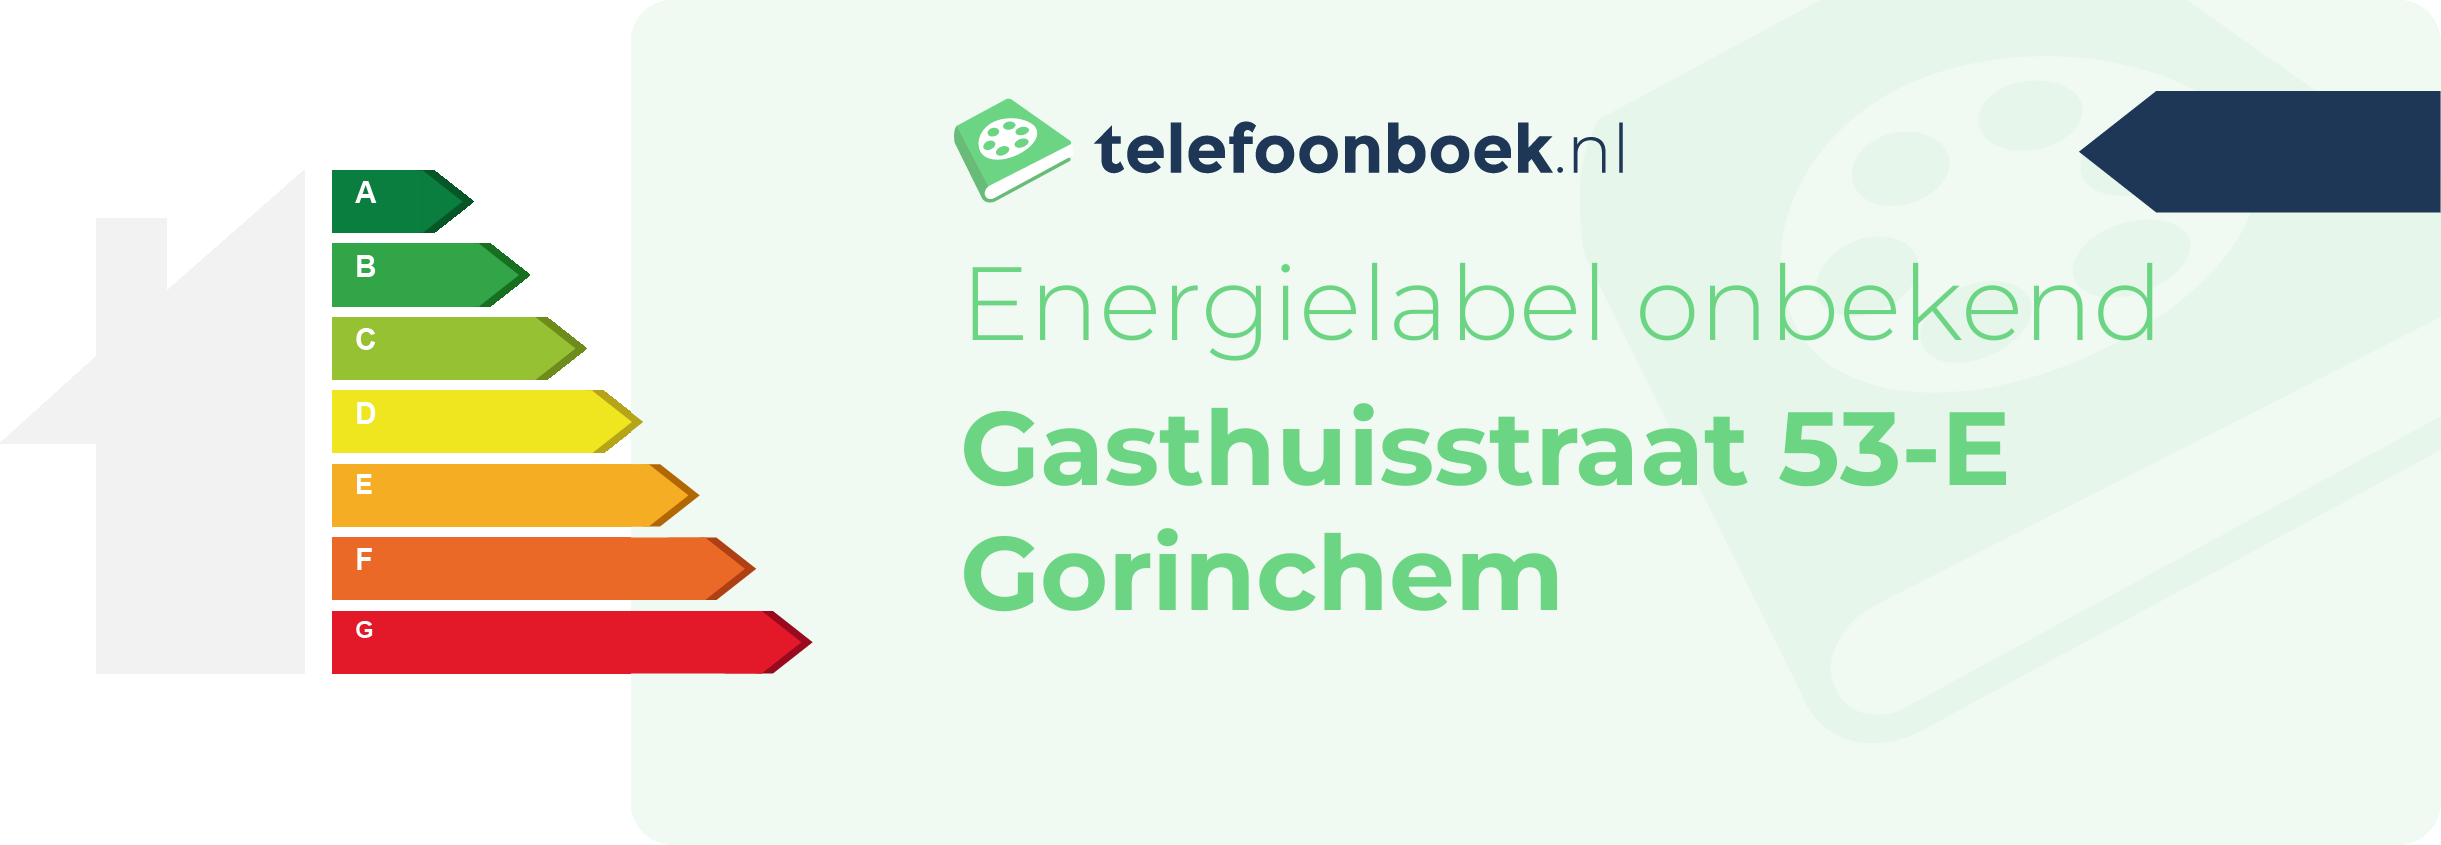 Energielabel Gasthuisstraat 53-E Gorinchem